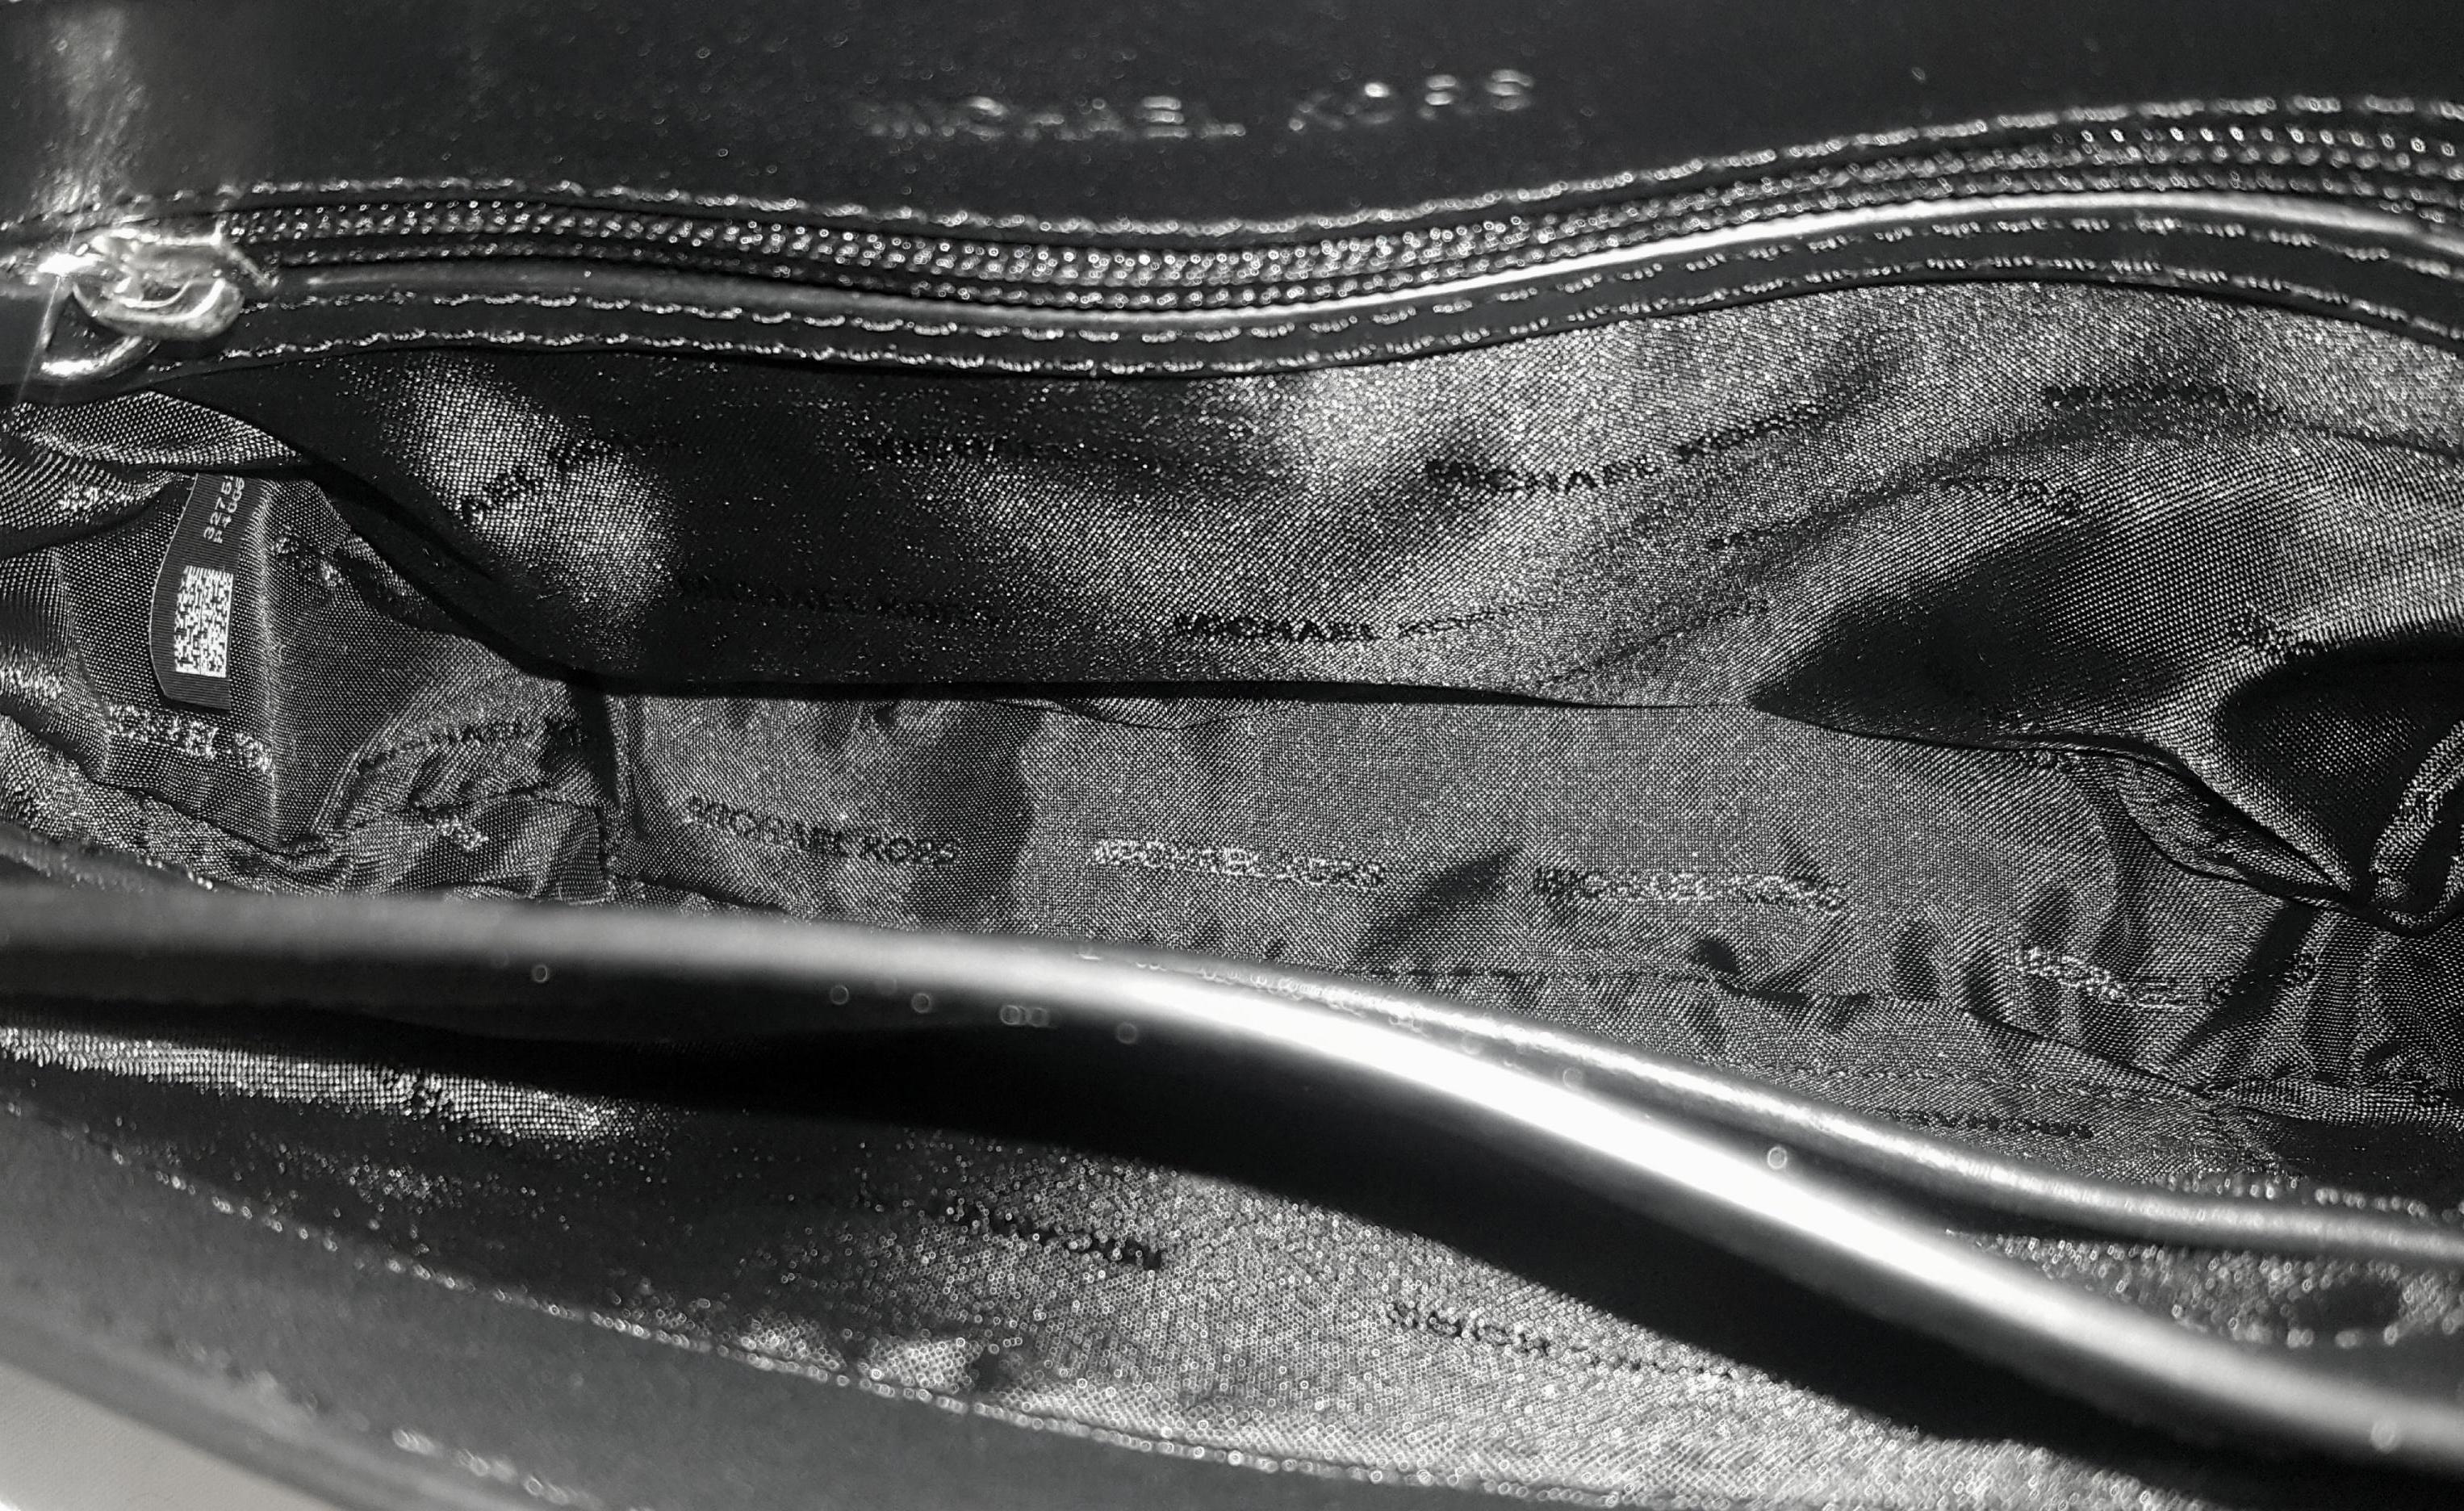 Michael Kors Jenkins Studded Black Leather Bag NEW W Tags 3